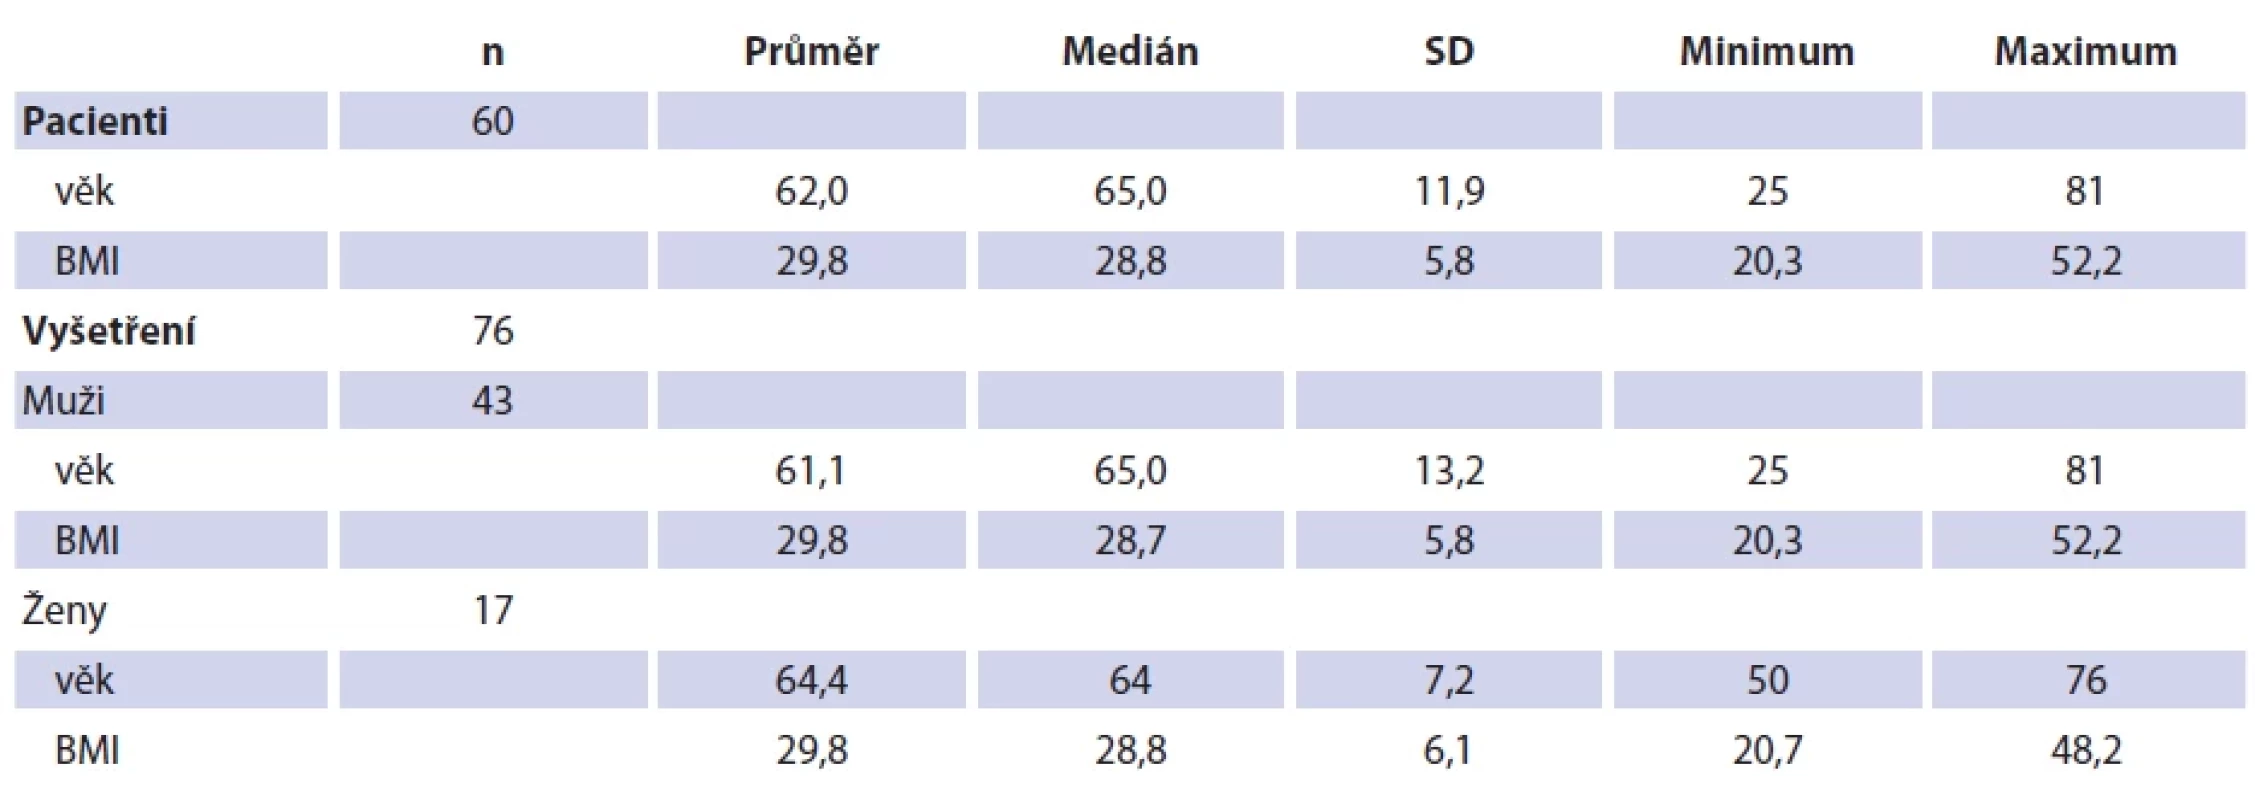 Demografi cká data pacientů.  //  Tab. 1. Demographic data of the patients.